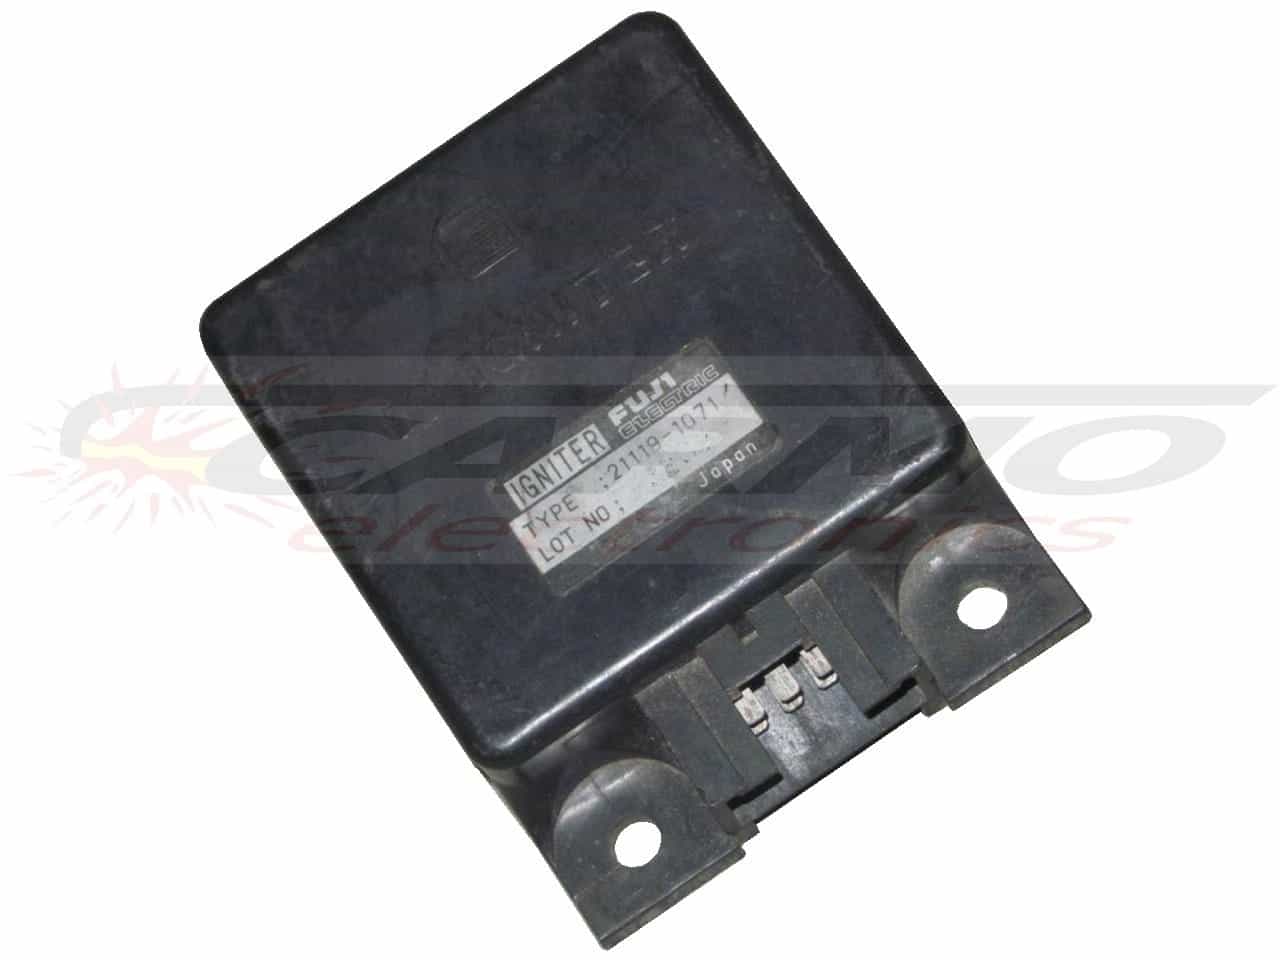 GPZ1100 unitrack (21119-1071) TCI CDI dispositif de commande boîte noire